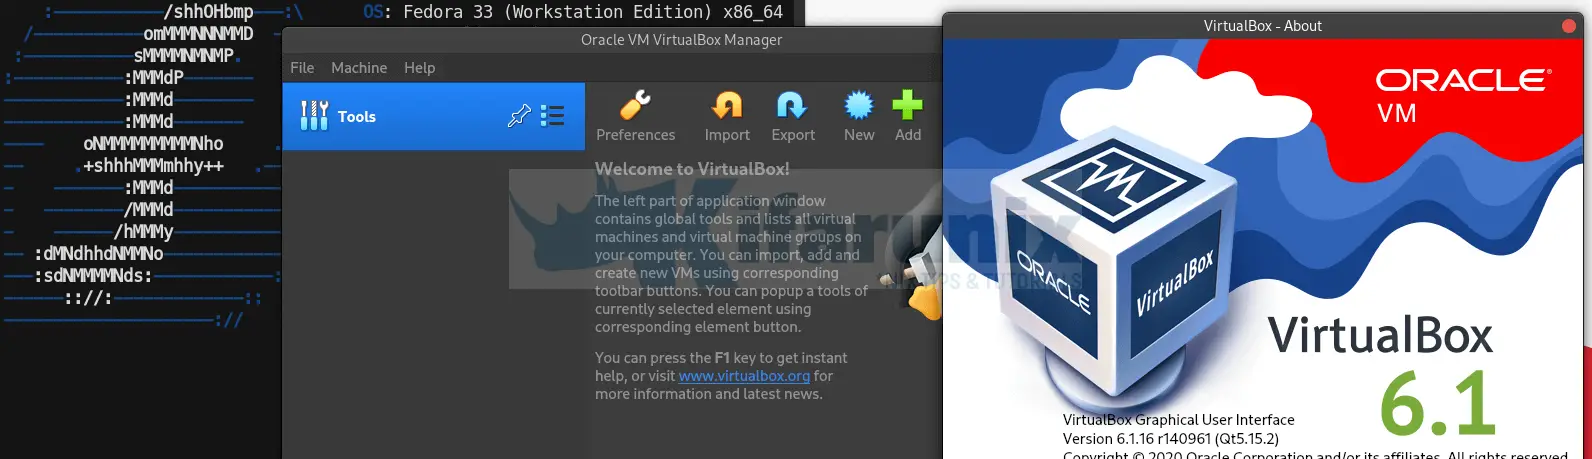  install VirtualBox 6.1 in Fedora 33